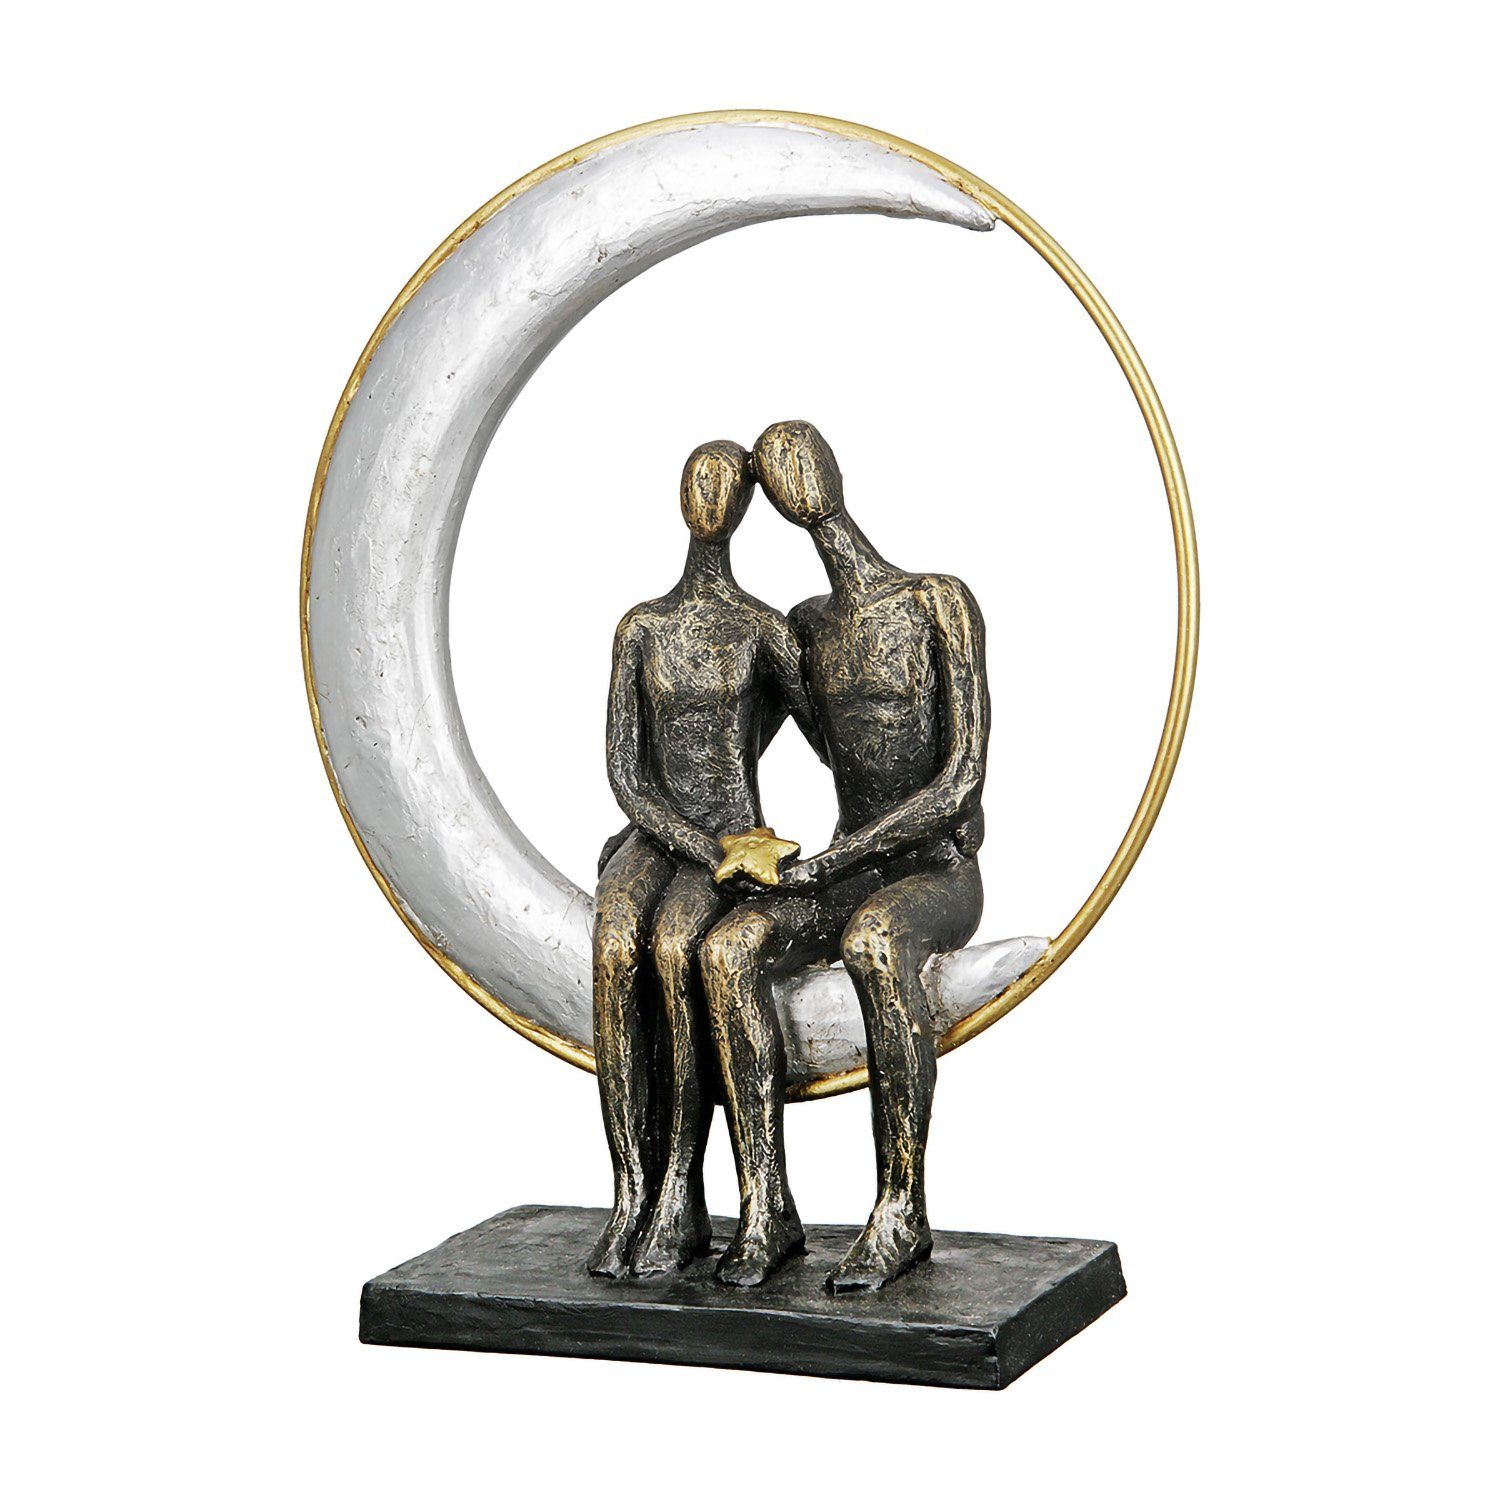 x by 29cm : B. 9cm St), Maße x Casablanca Skulptur (1 Gilde 27cm H. Moonlight T. Dekofigur